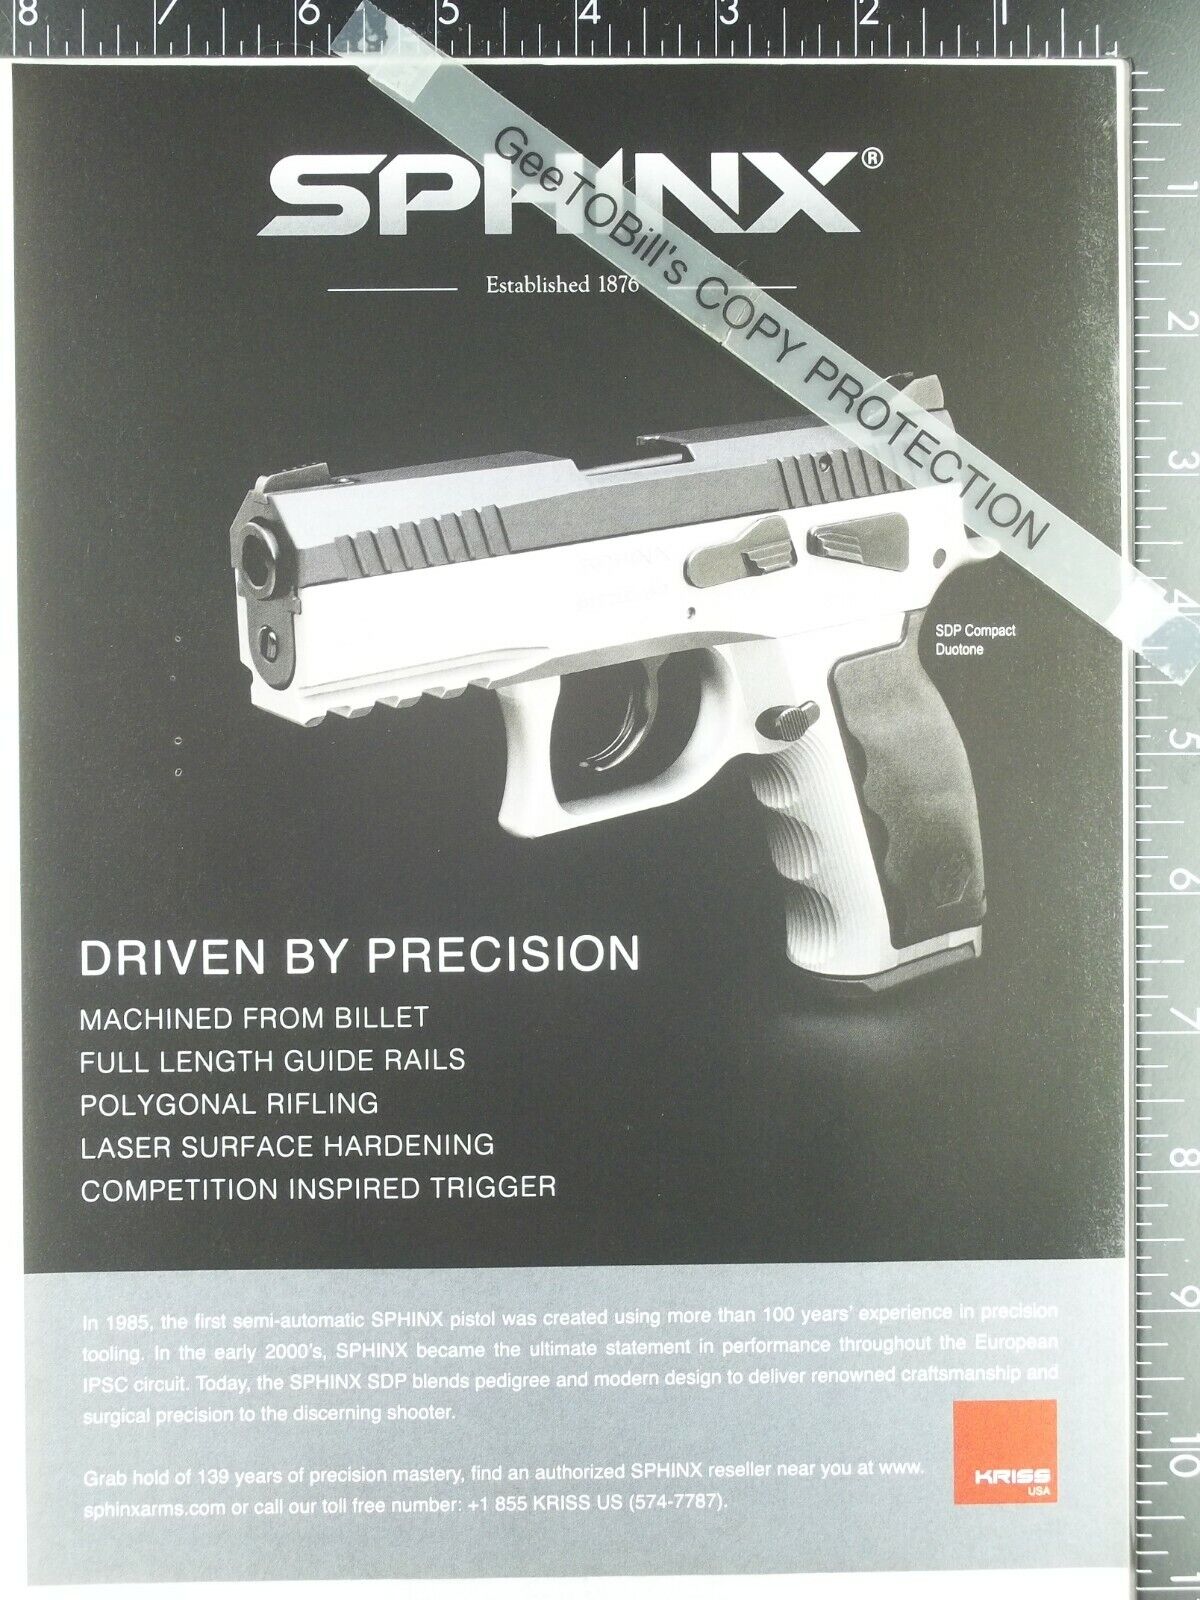 2015 ADVERTISING ADVERTISEMENT AD for Kris Sphinx SDP Compact Duotone pistol gun